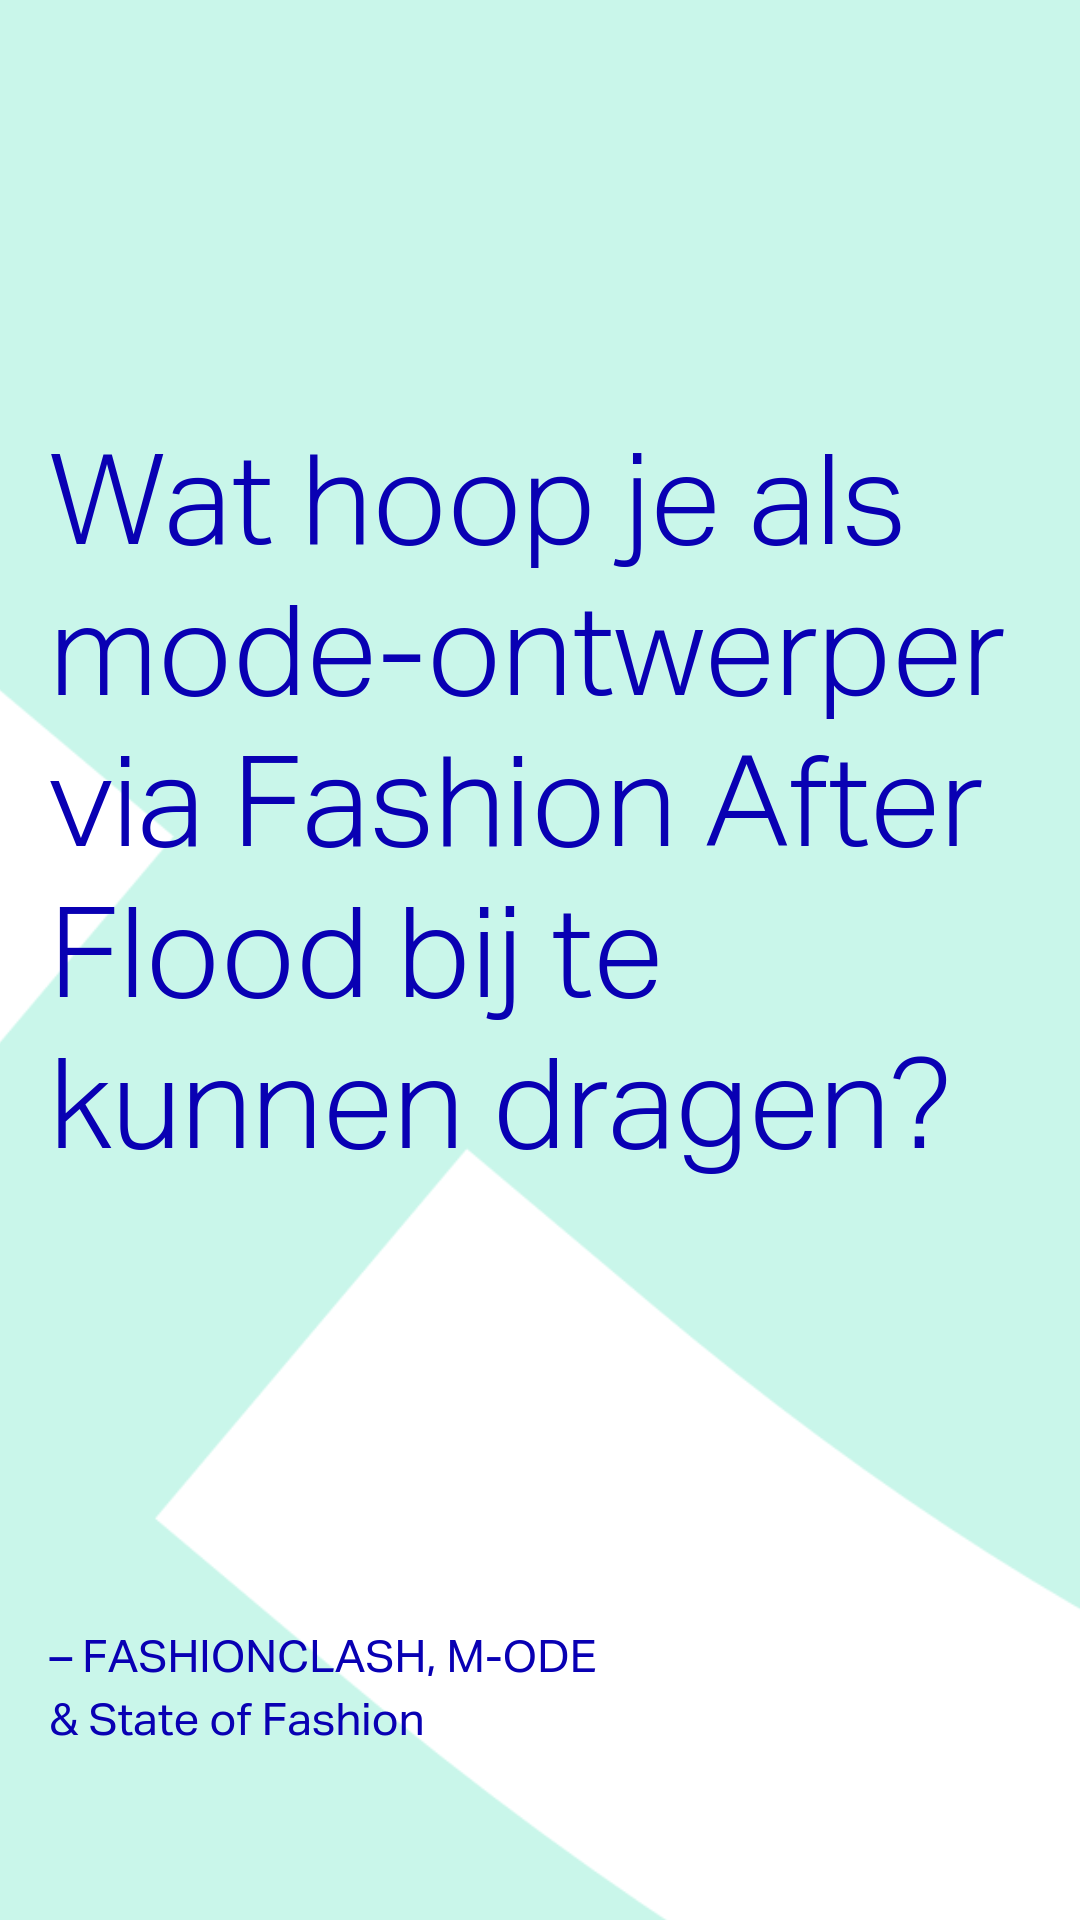 Taskforce-fashion-fashion-after-flood-kennismaking-algemeen4.png